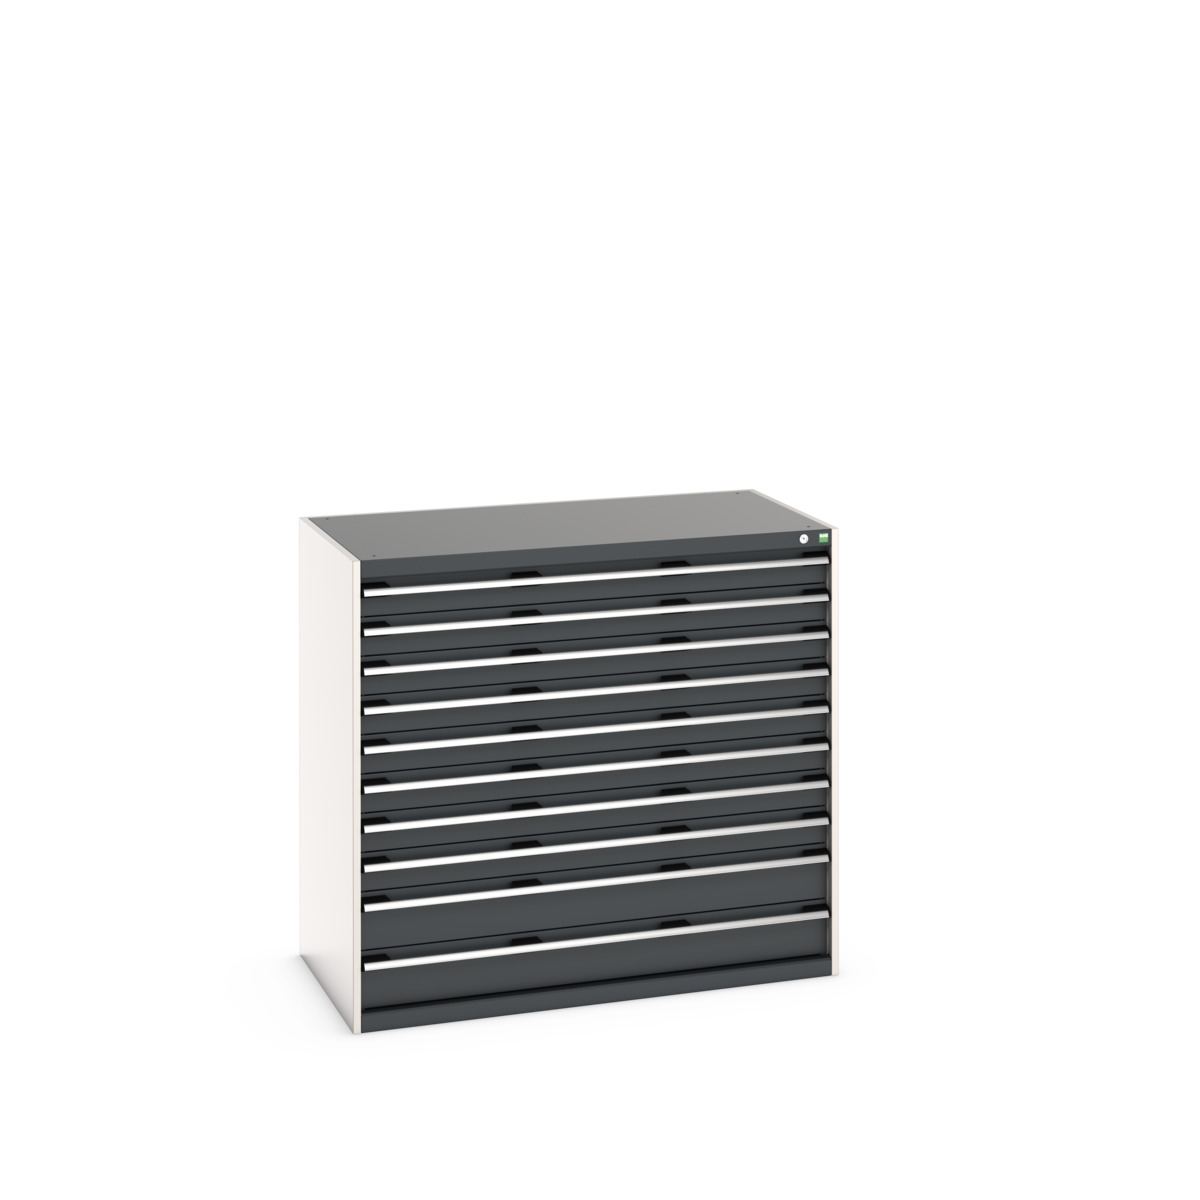 40030026. - cubio drawer cabinet